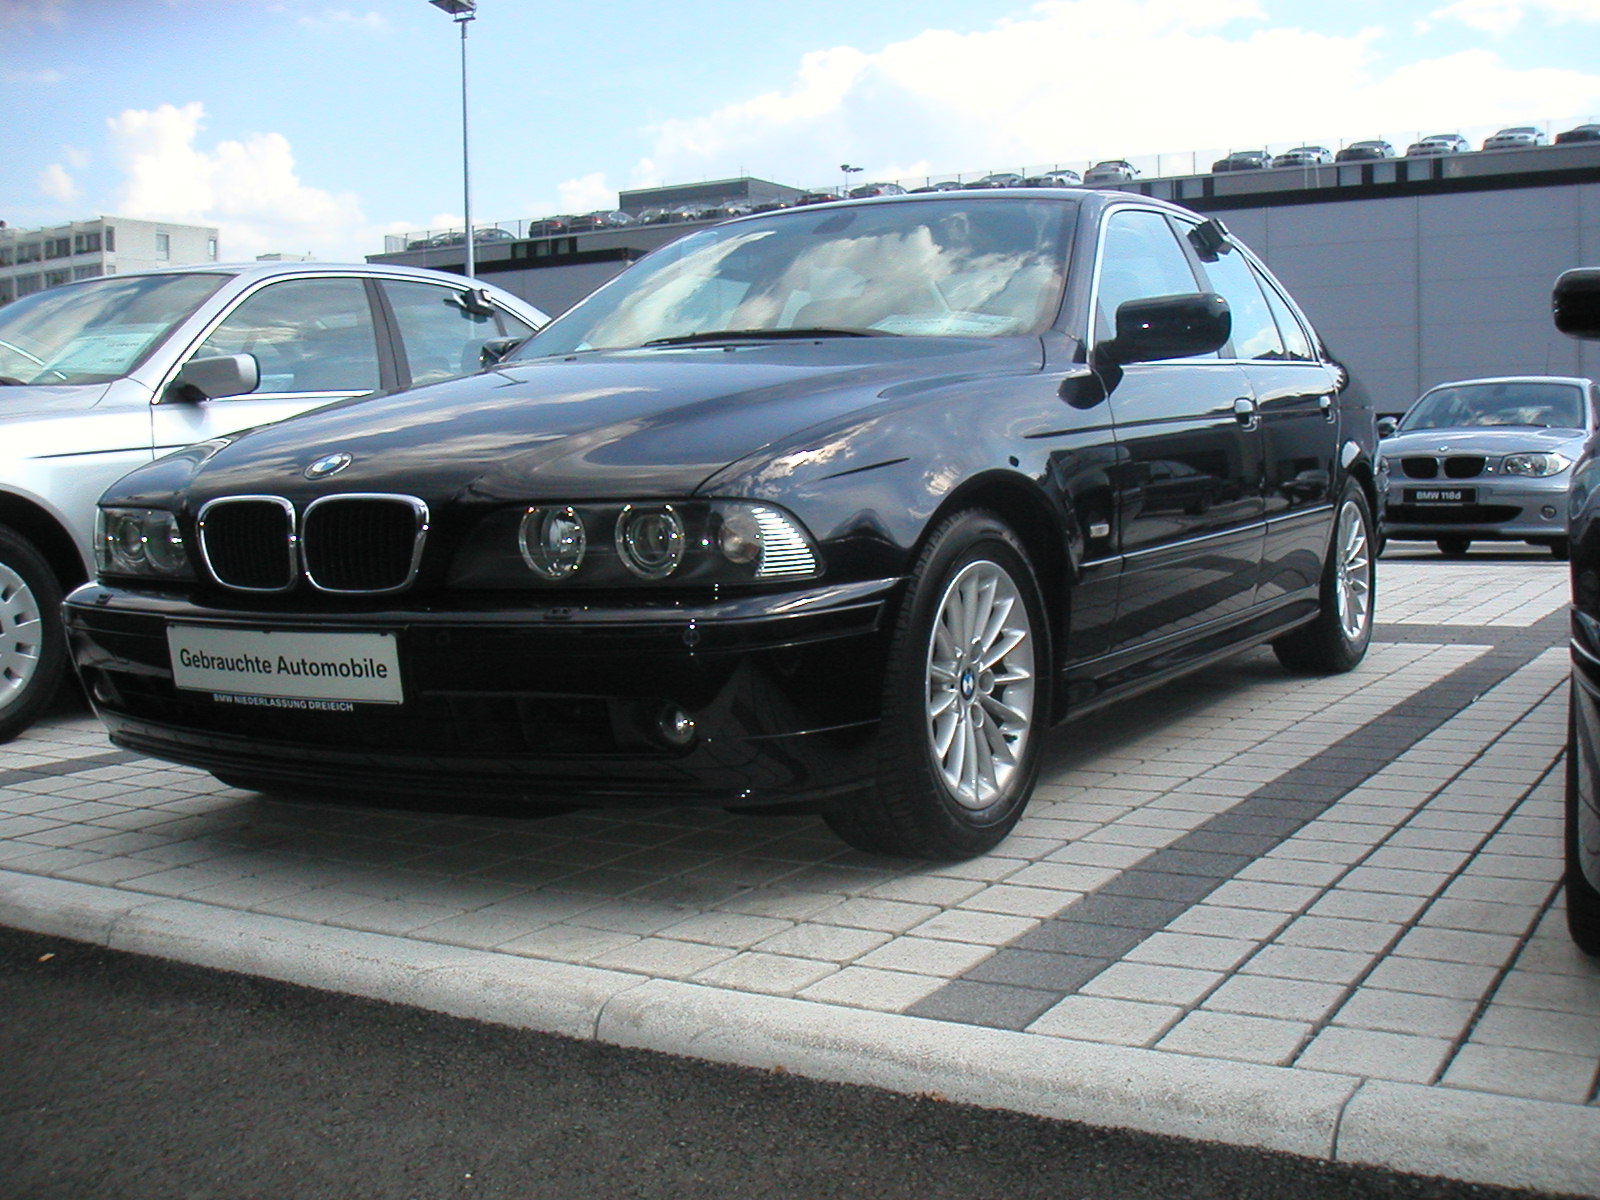 BMW 530iA Individual E39 2001 | Flickr - Photo Sharing!